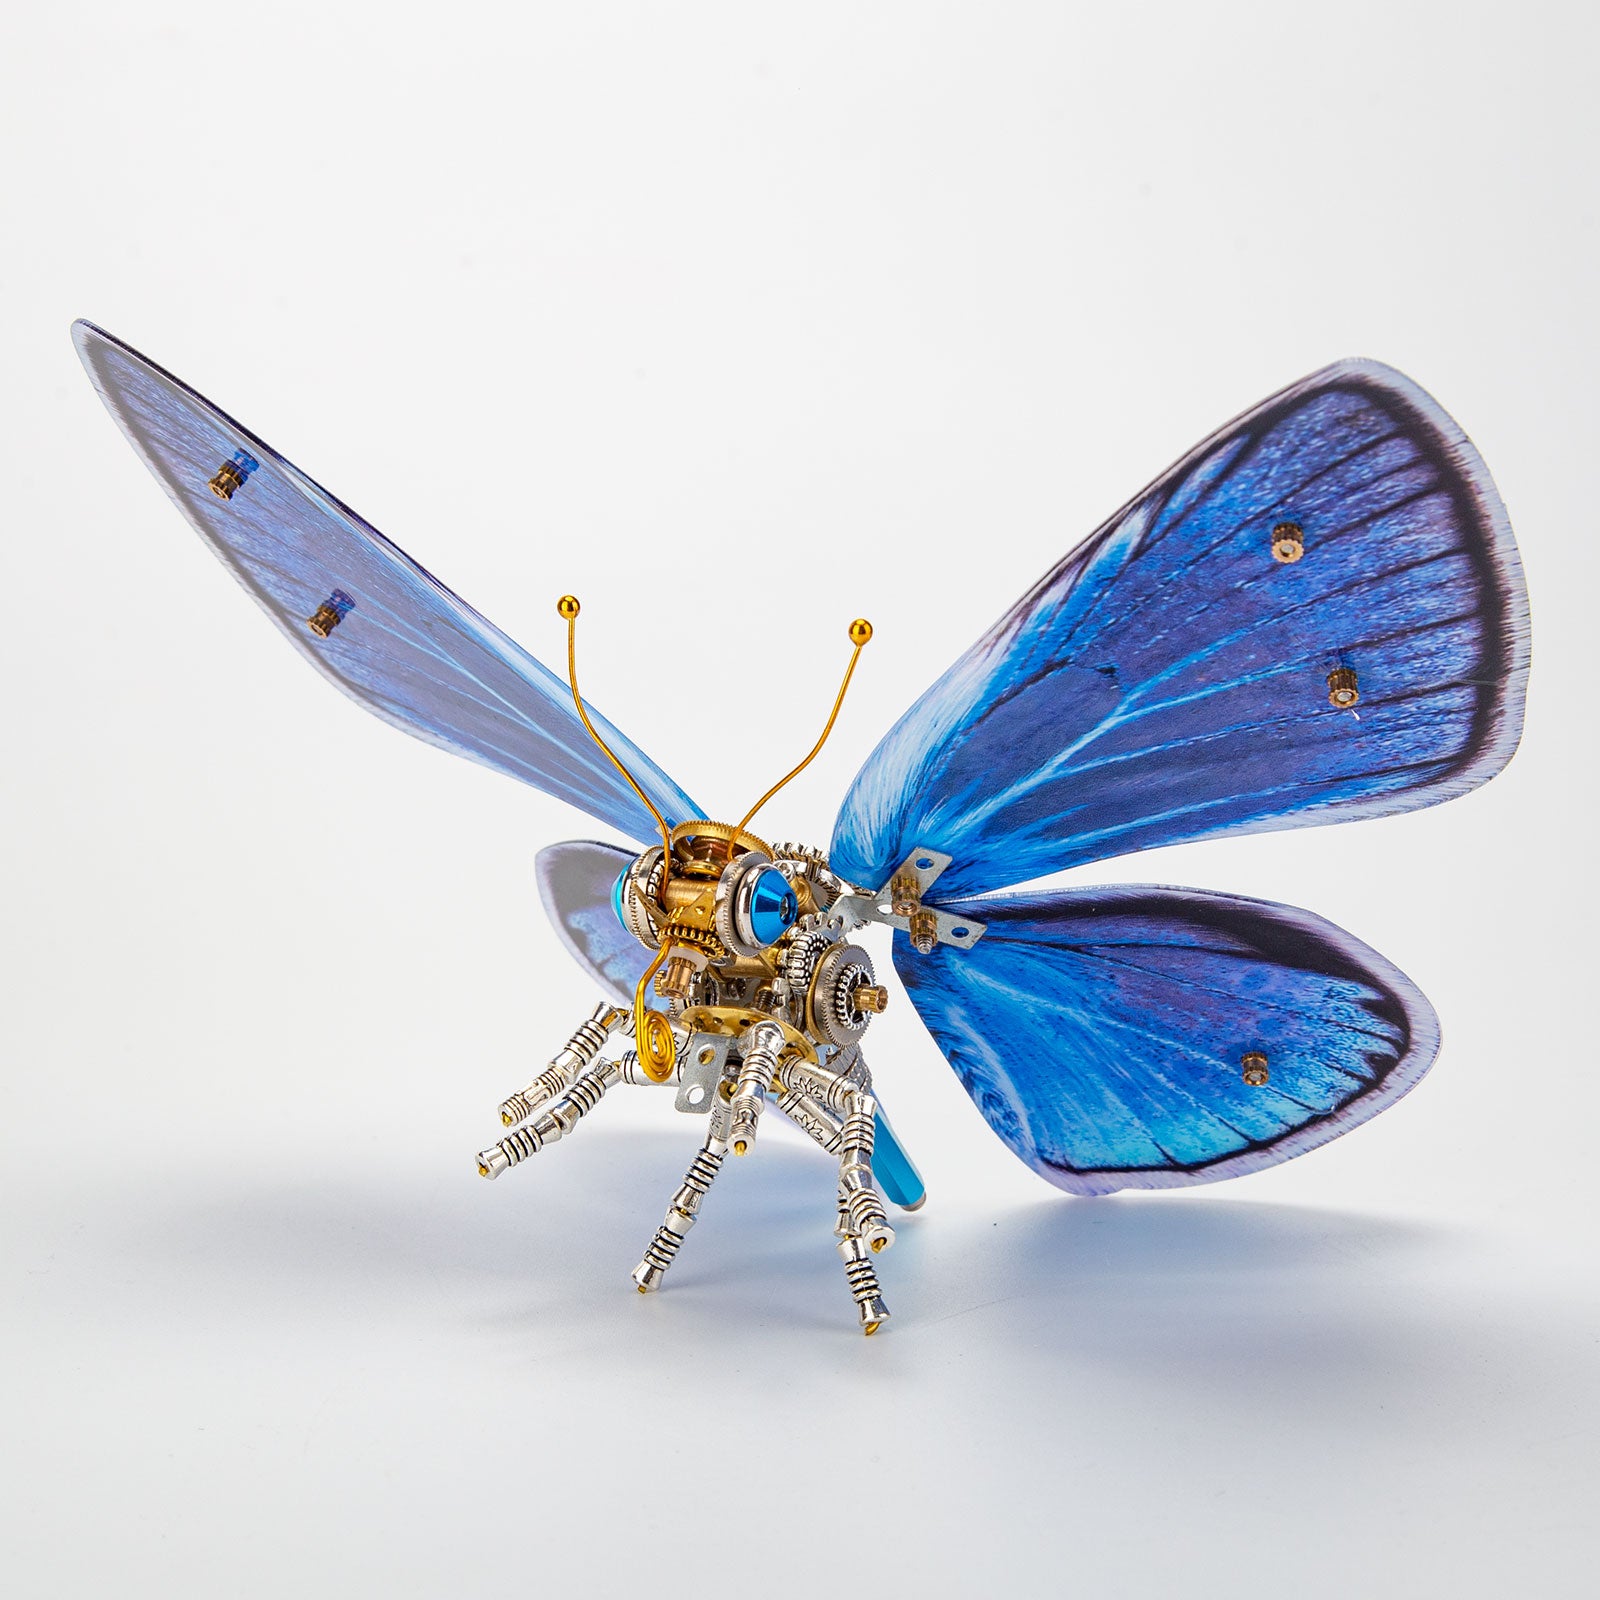 Steampunk Blue Morpho Butterfly 3D Metal Model Kits for Adults